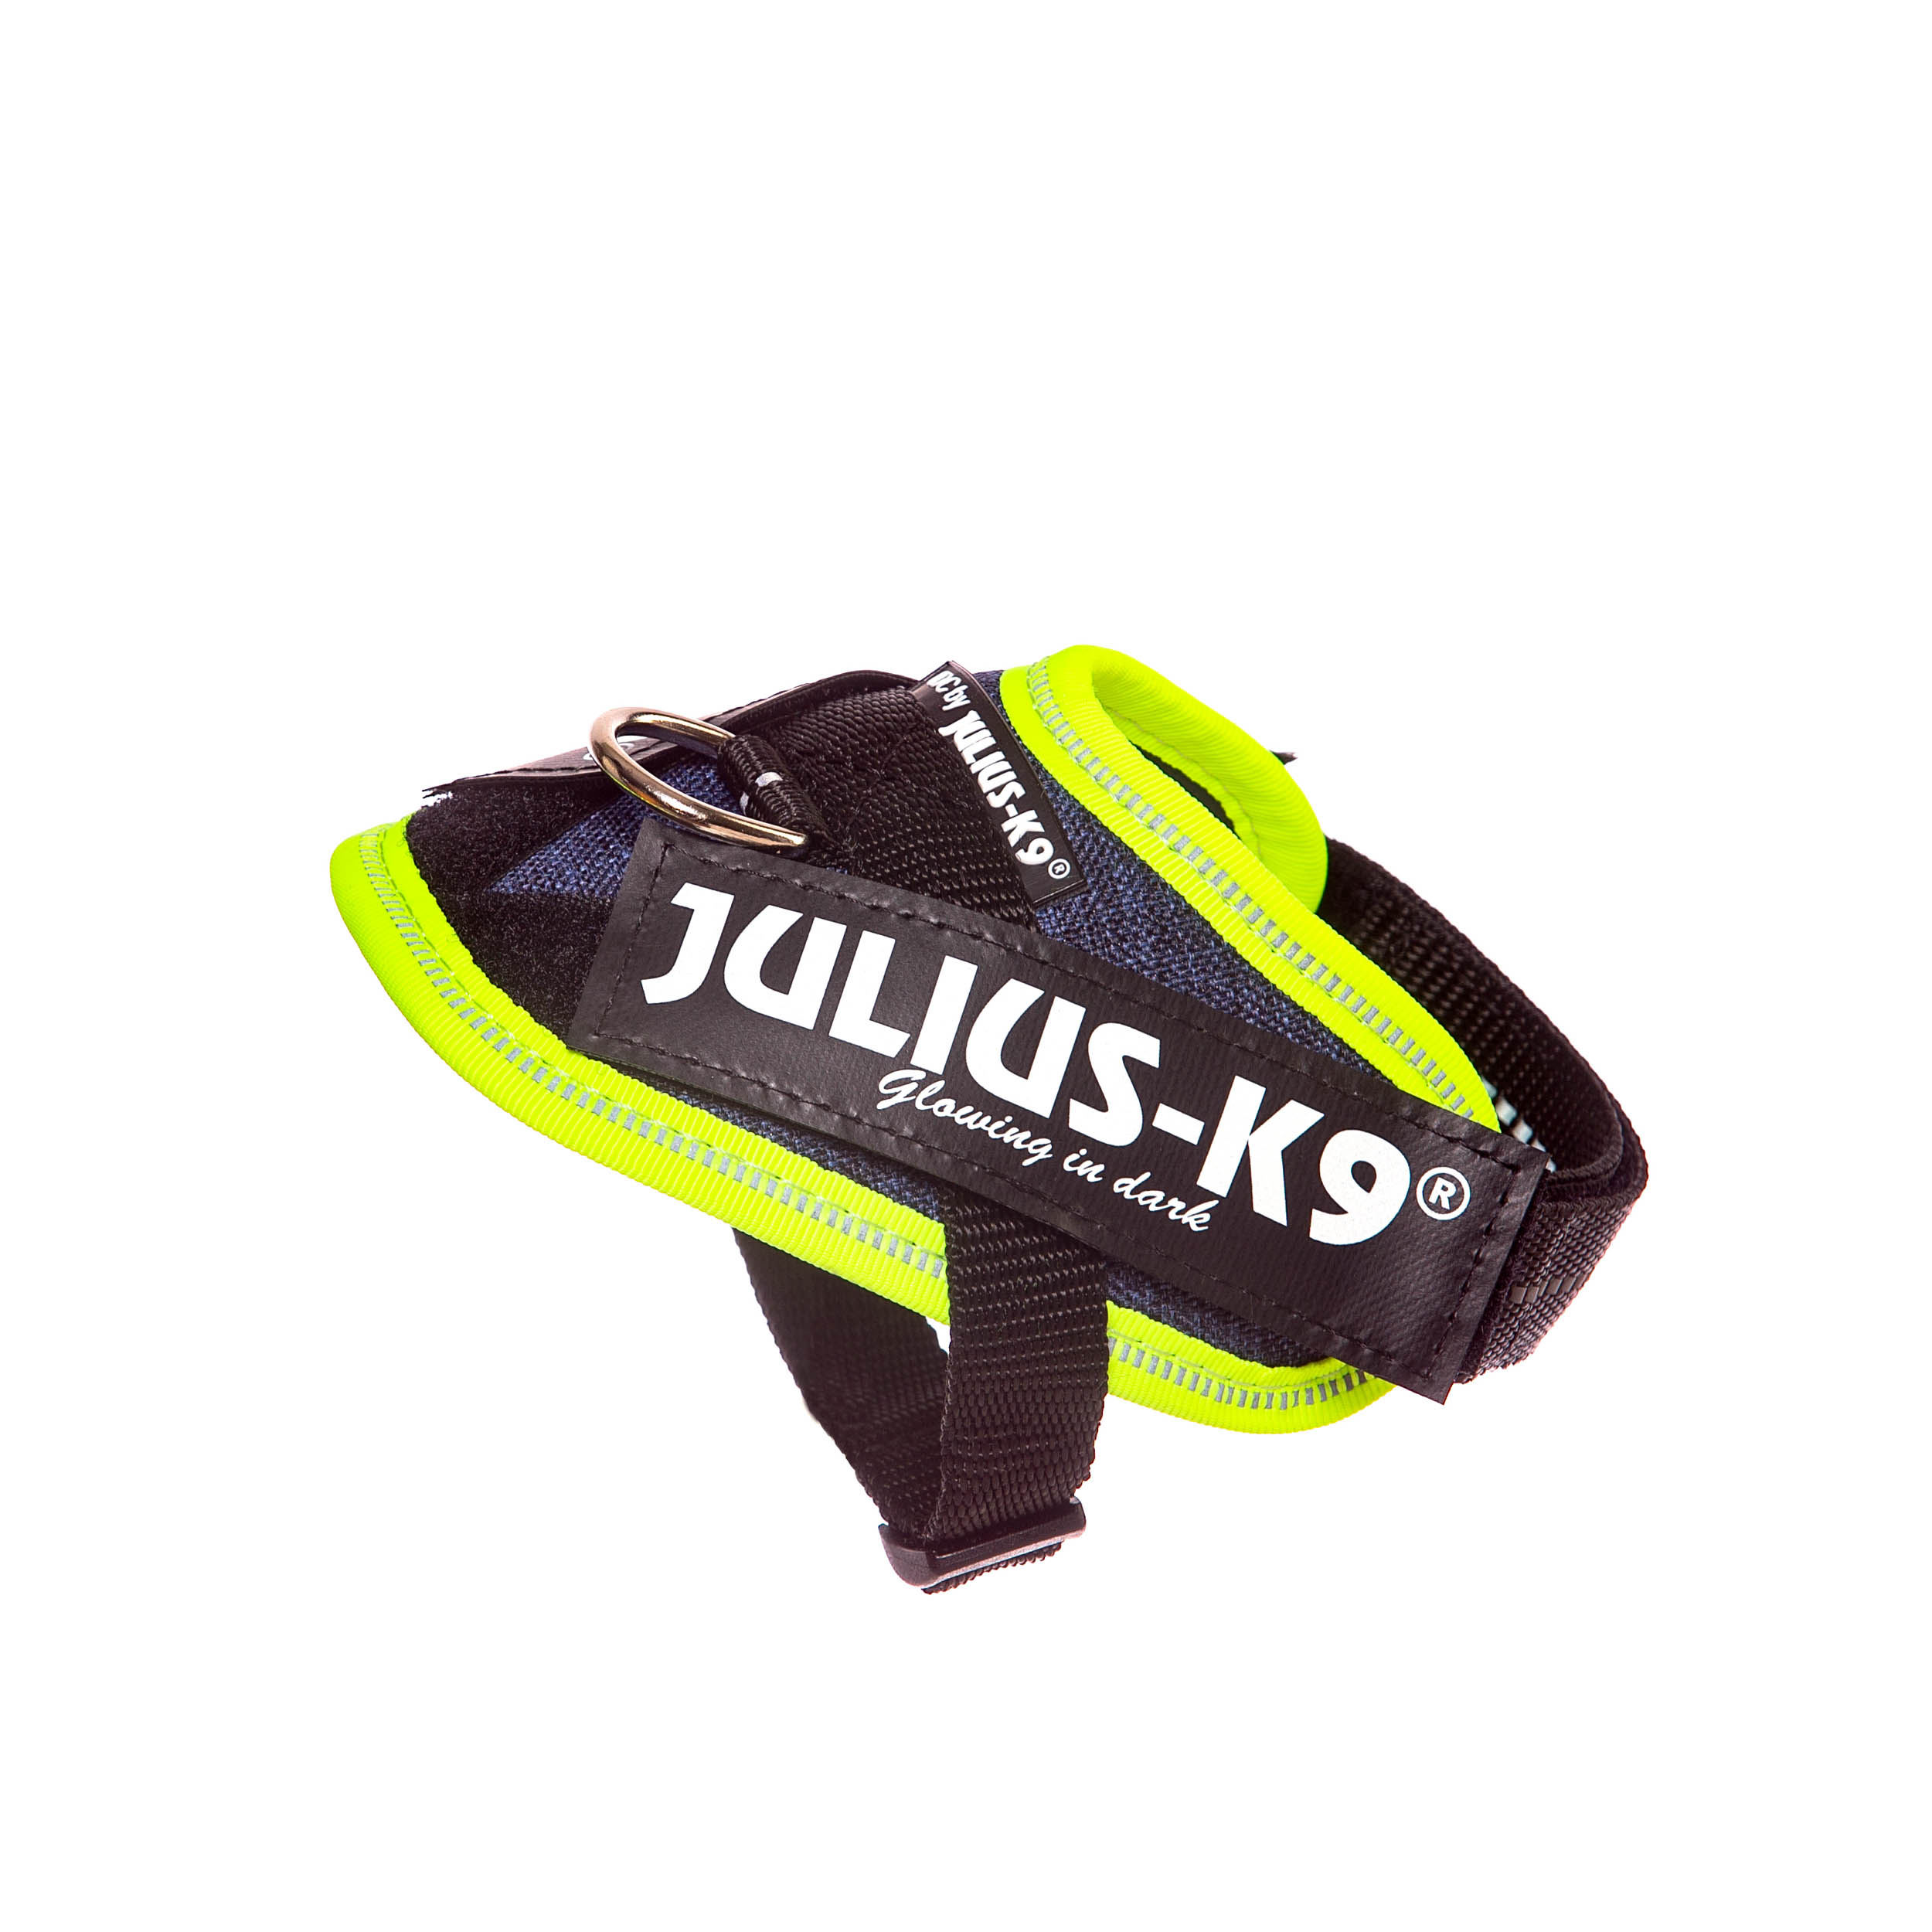 Harnais Julius K9® IDC-Power Jeans Fluo